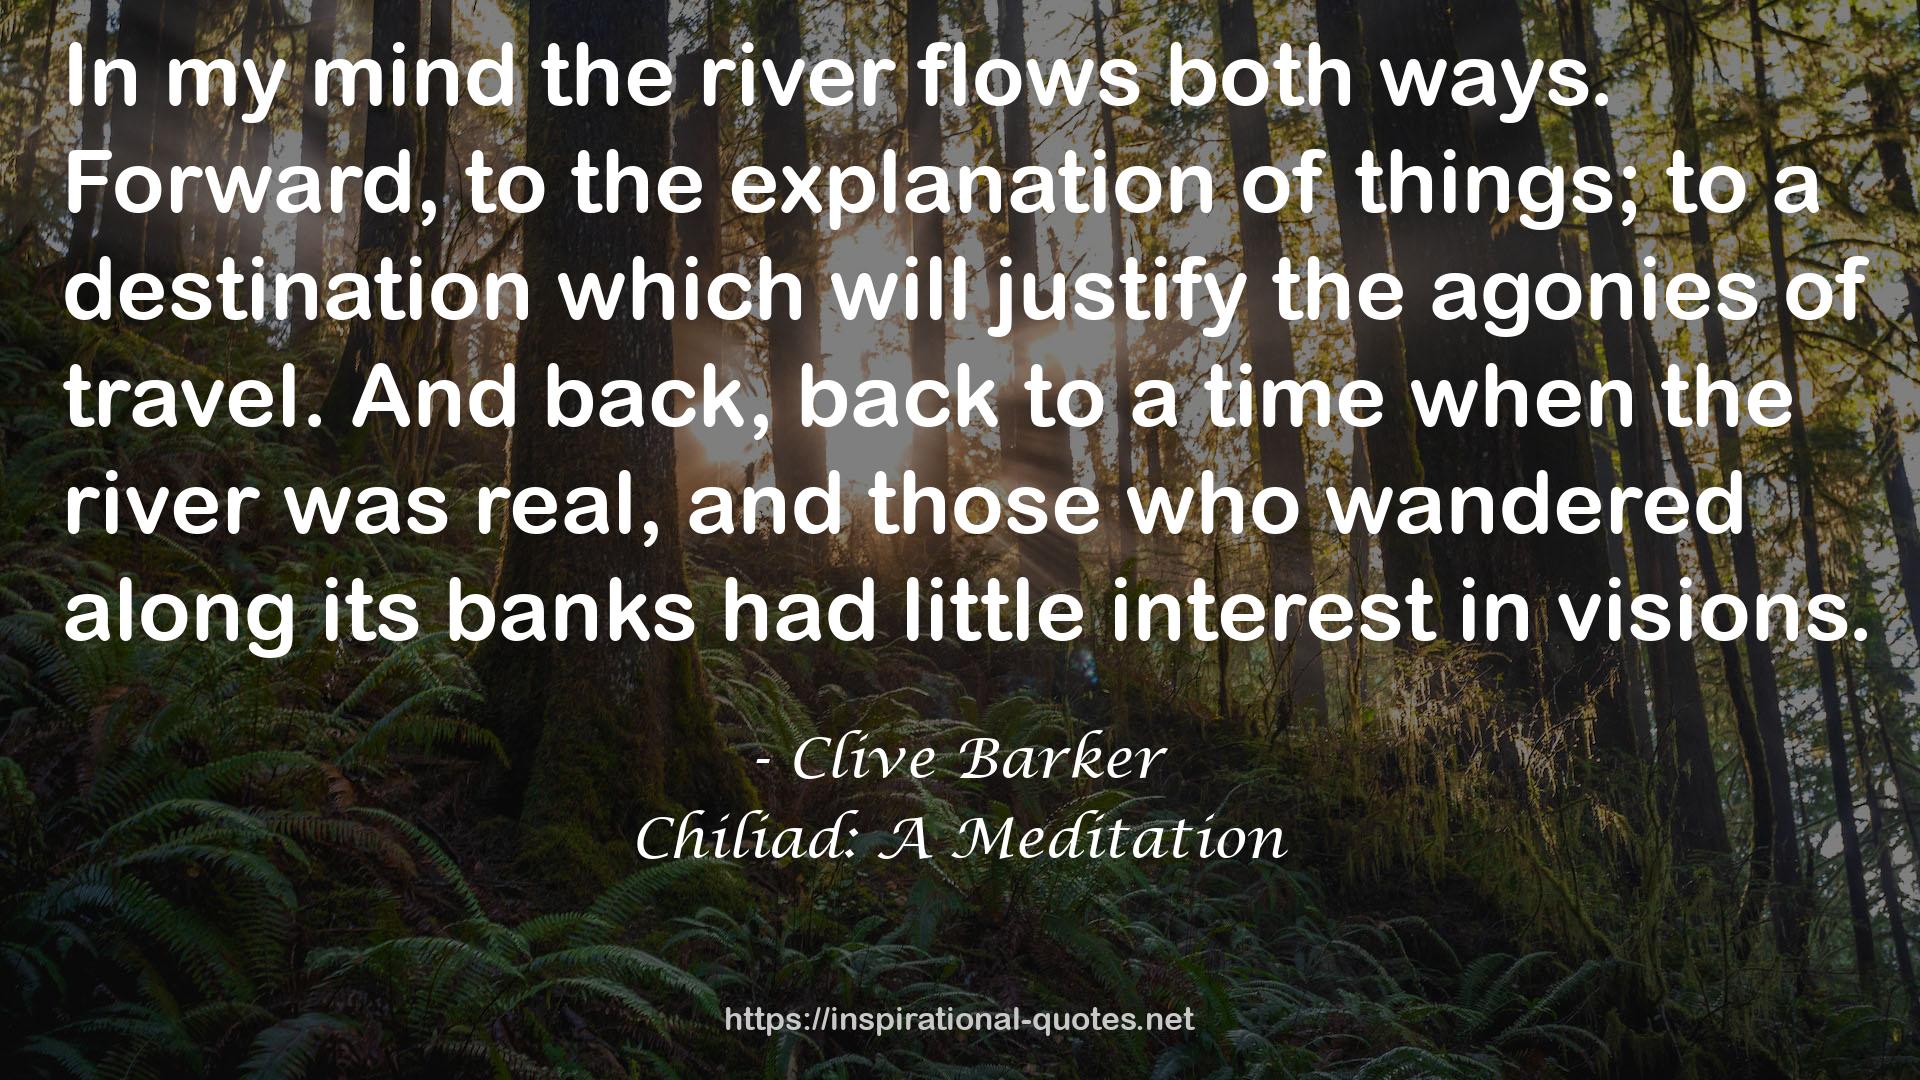 Chiliad: A Meditation QUOTES